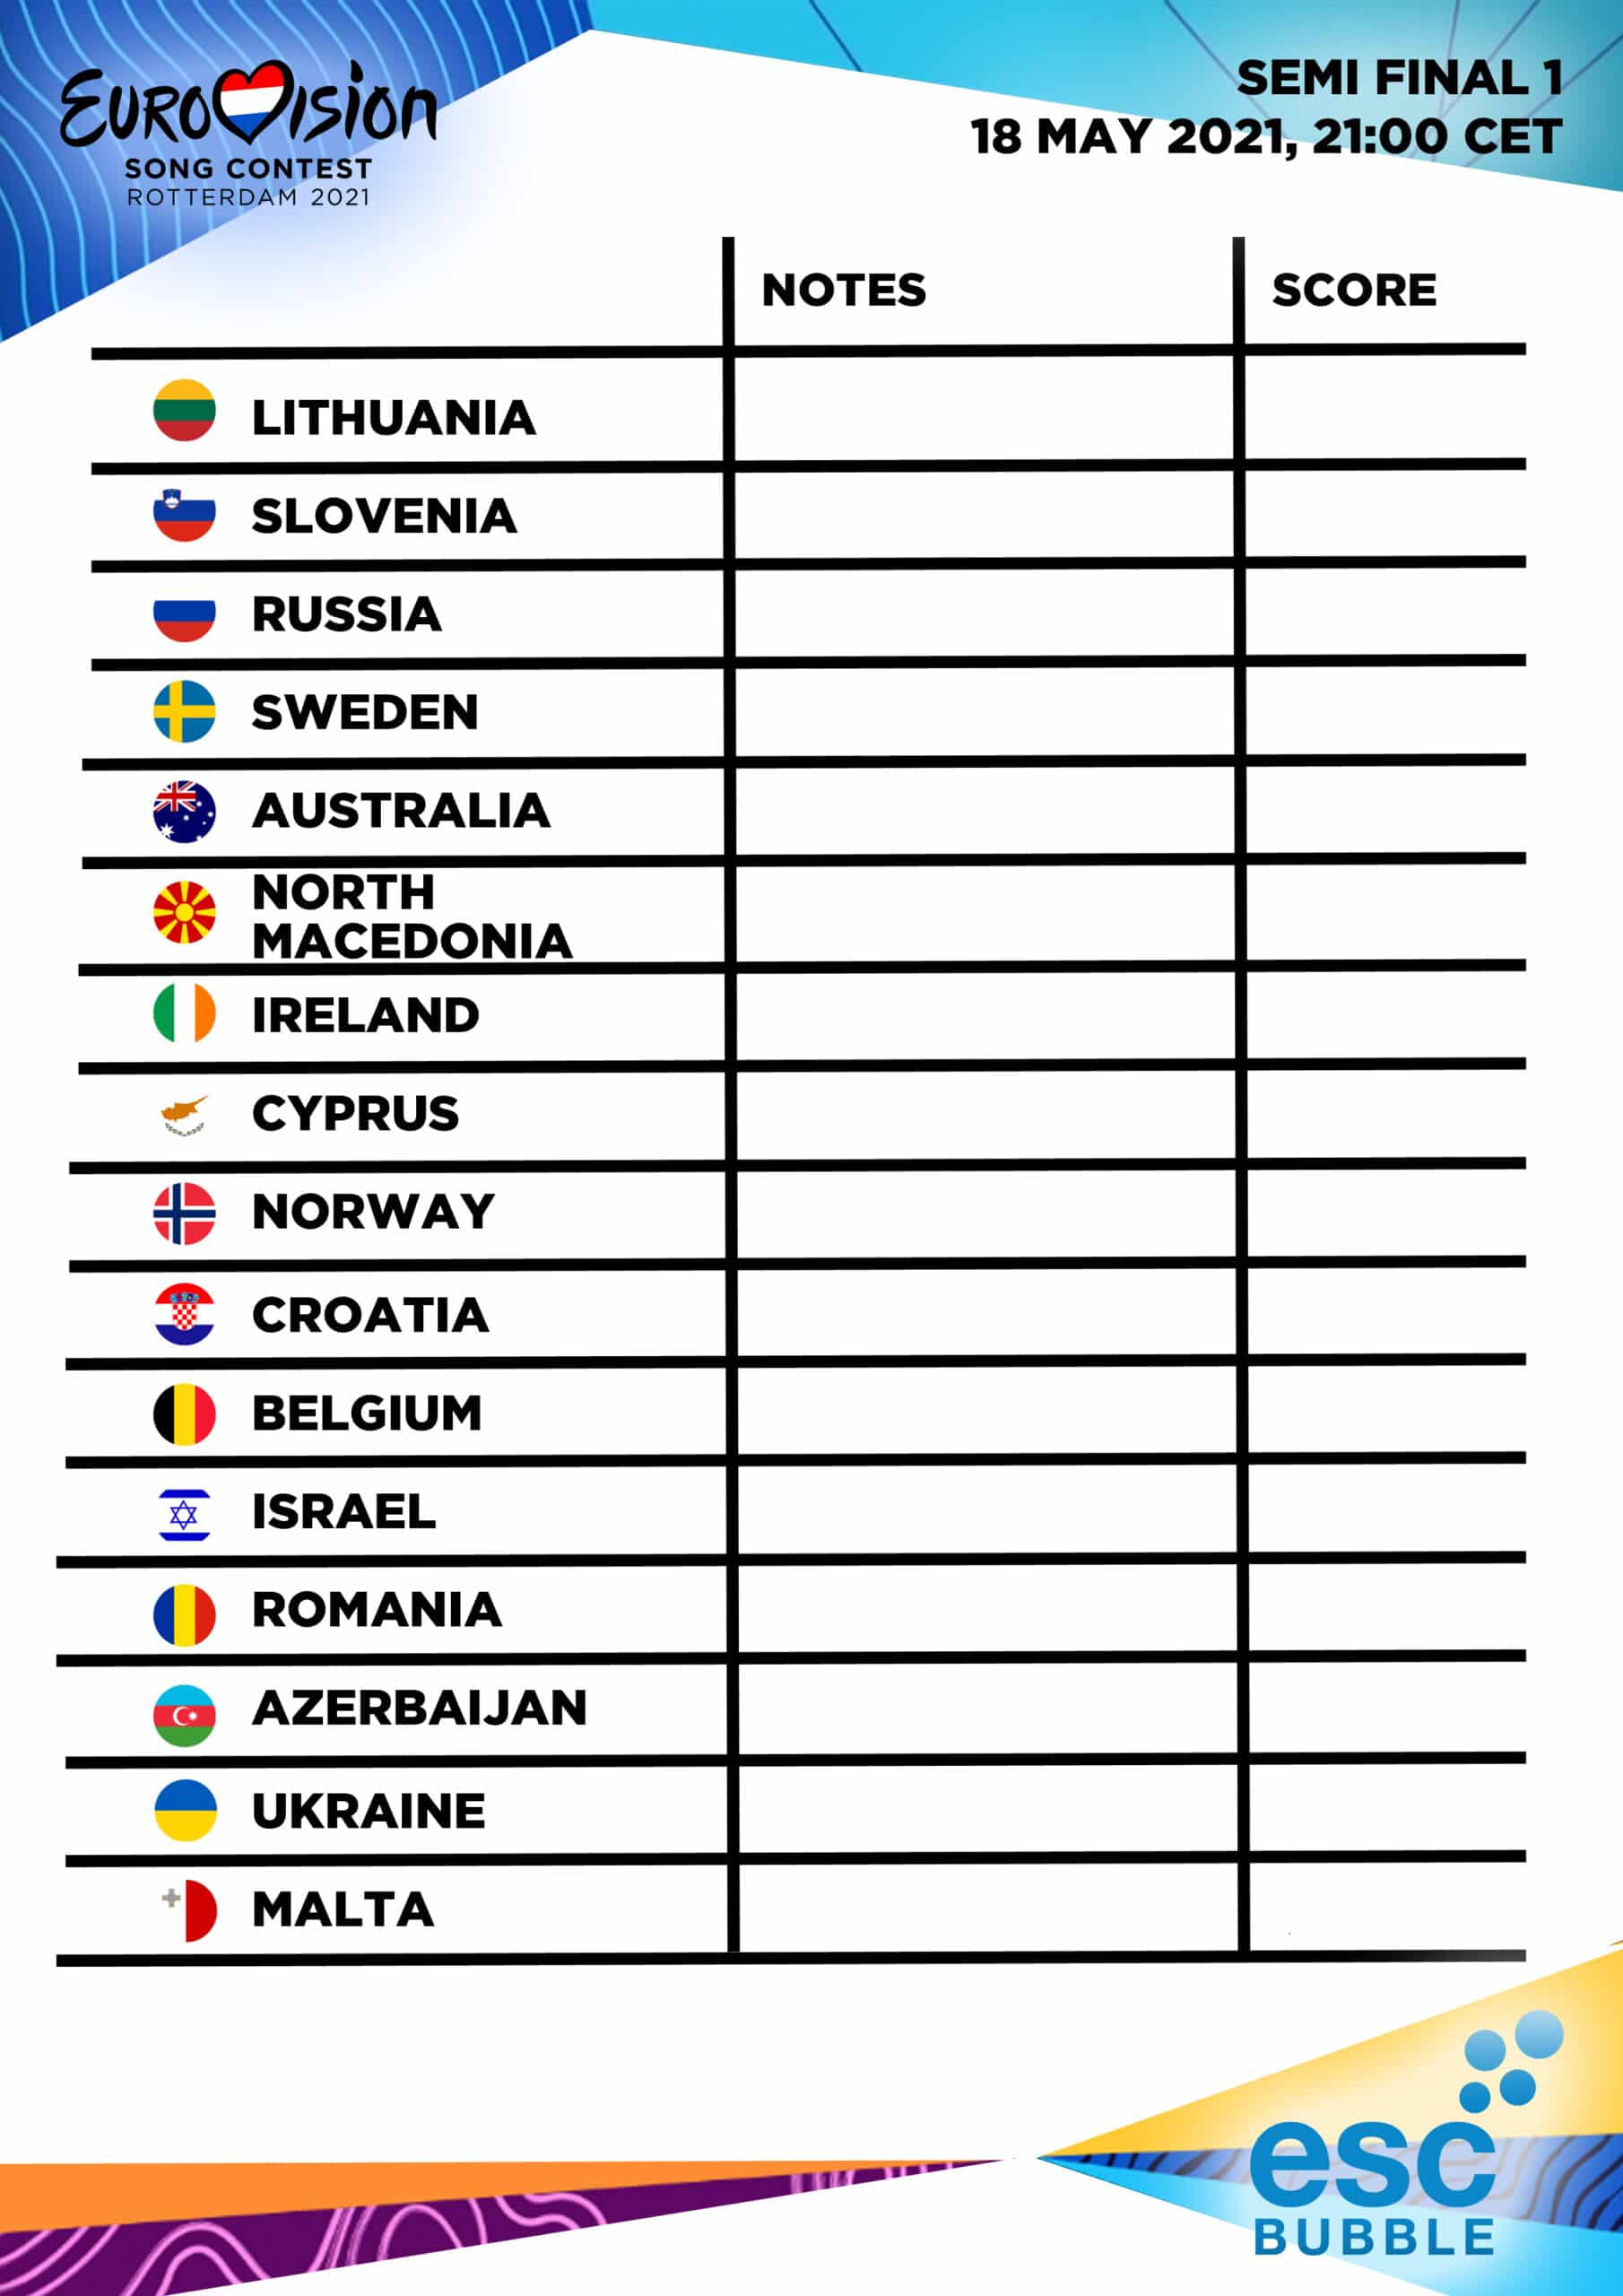 Eurovision 2021 Final Scoreboard / Gvjiwurrup1ndm / Watch the grand